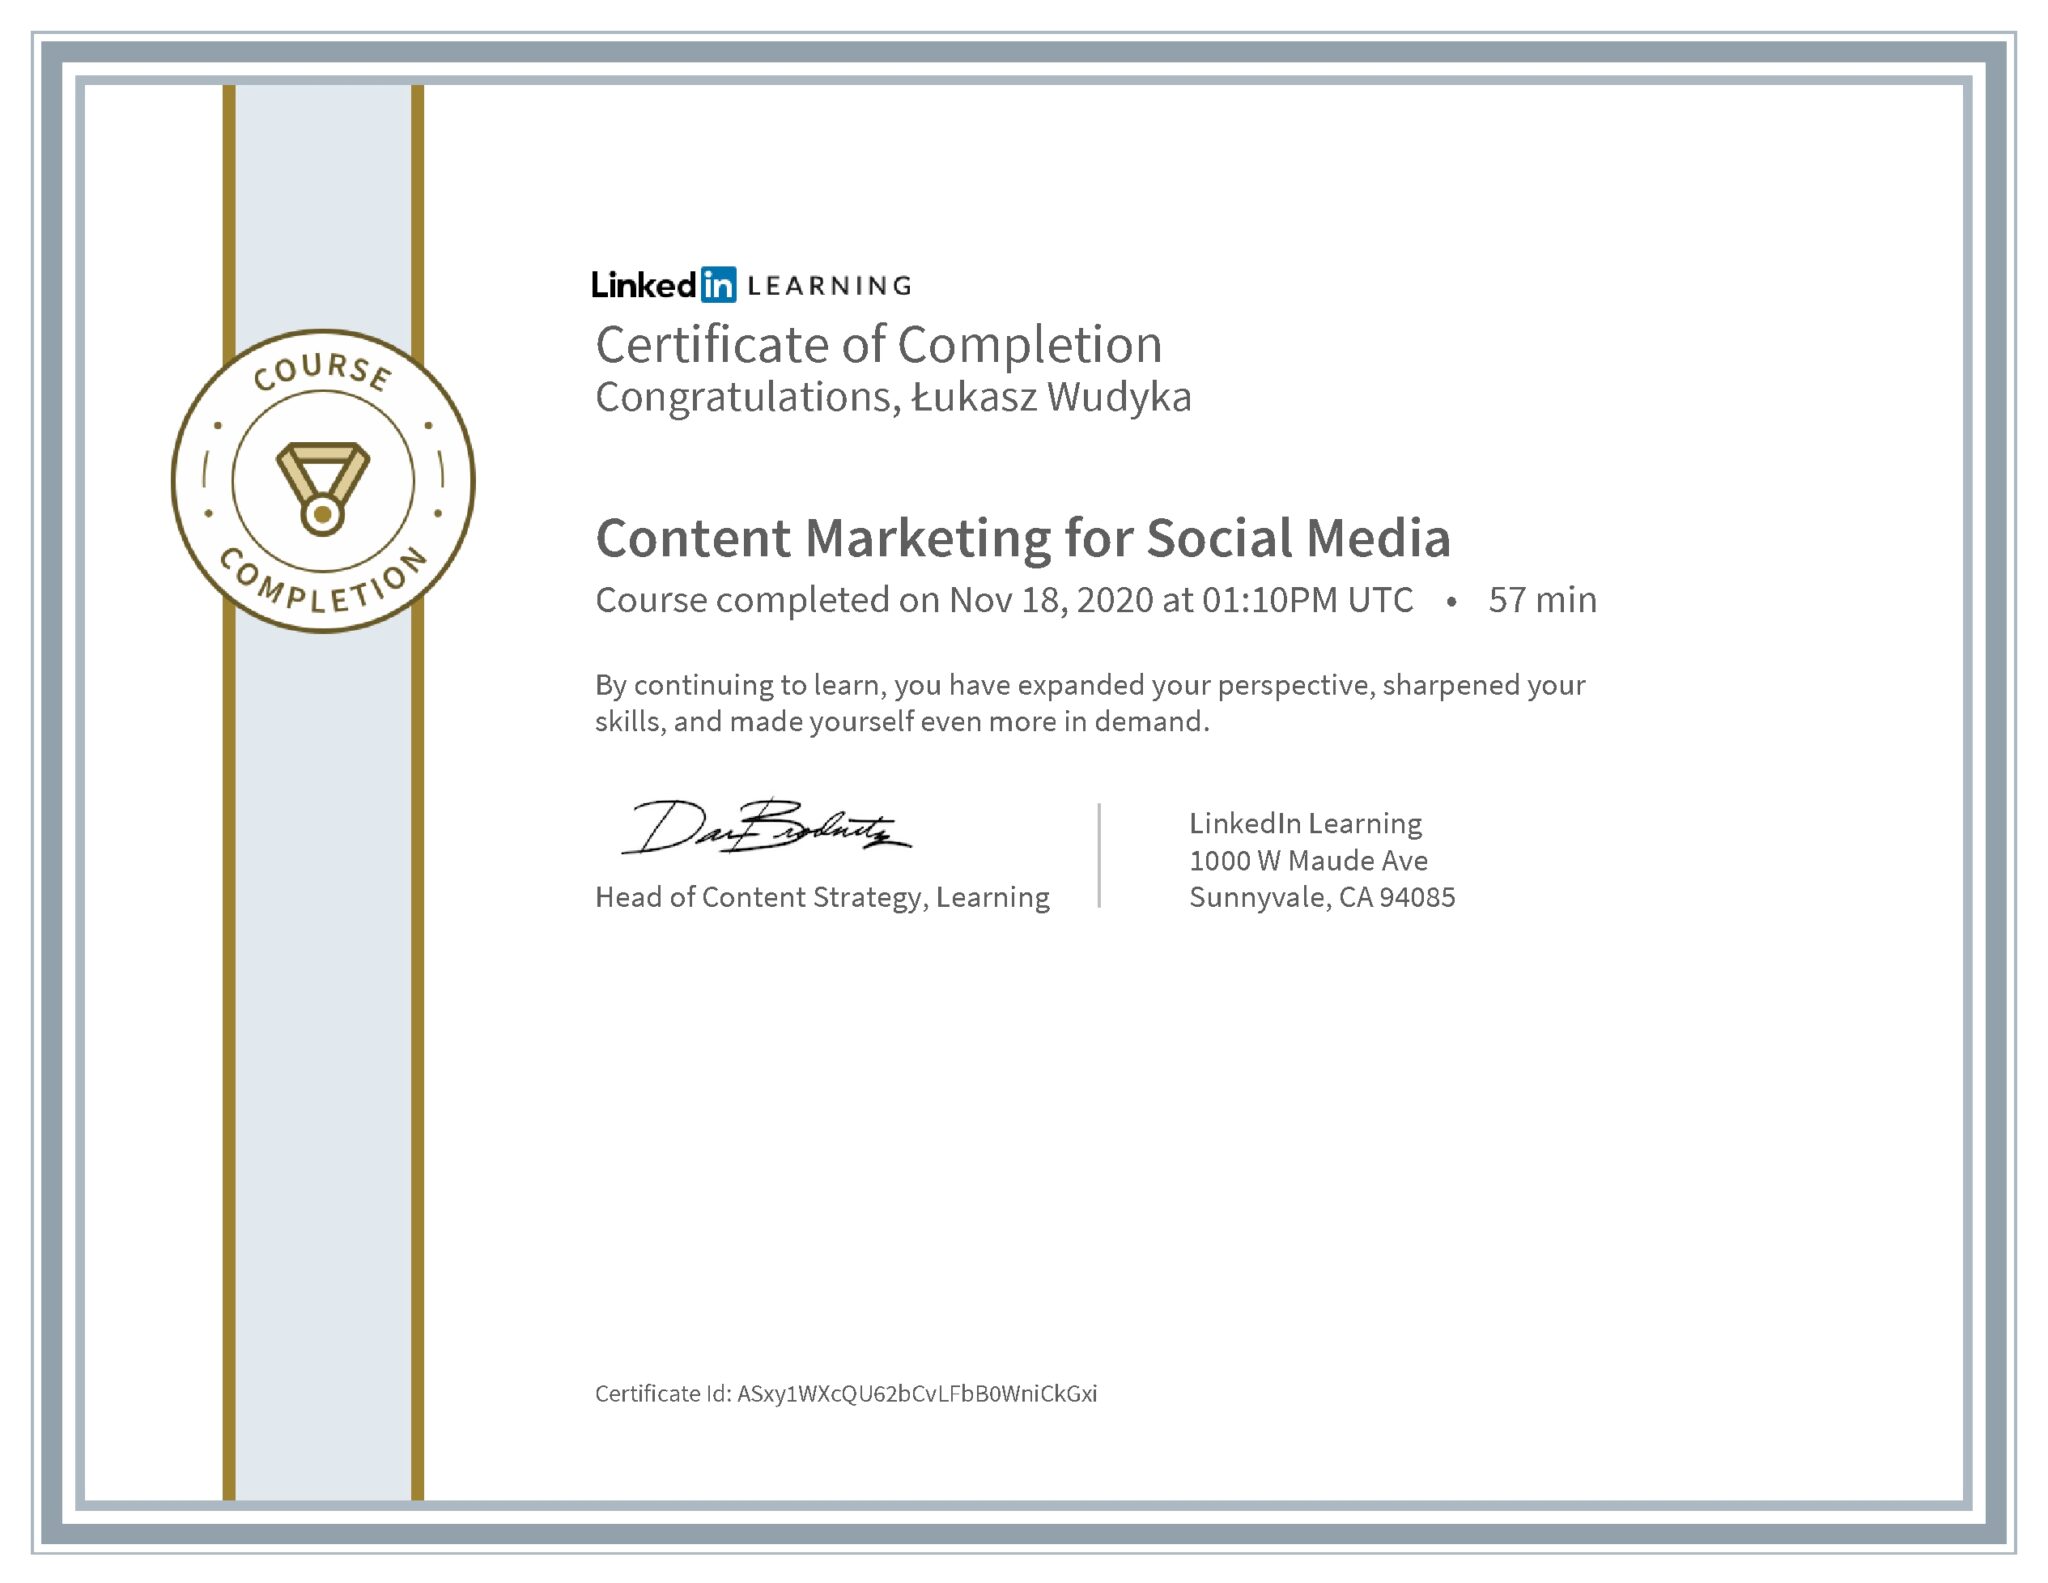 Łukasz Wudyka certyfikat LinkedIn Content Marketing for Social Media